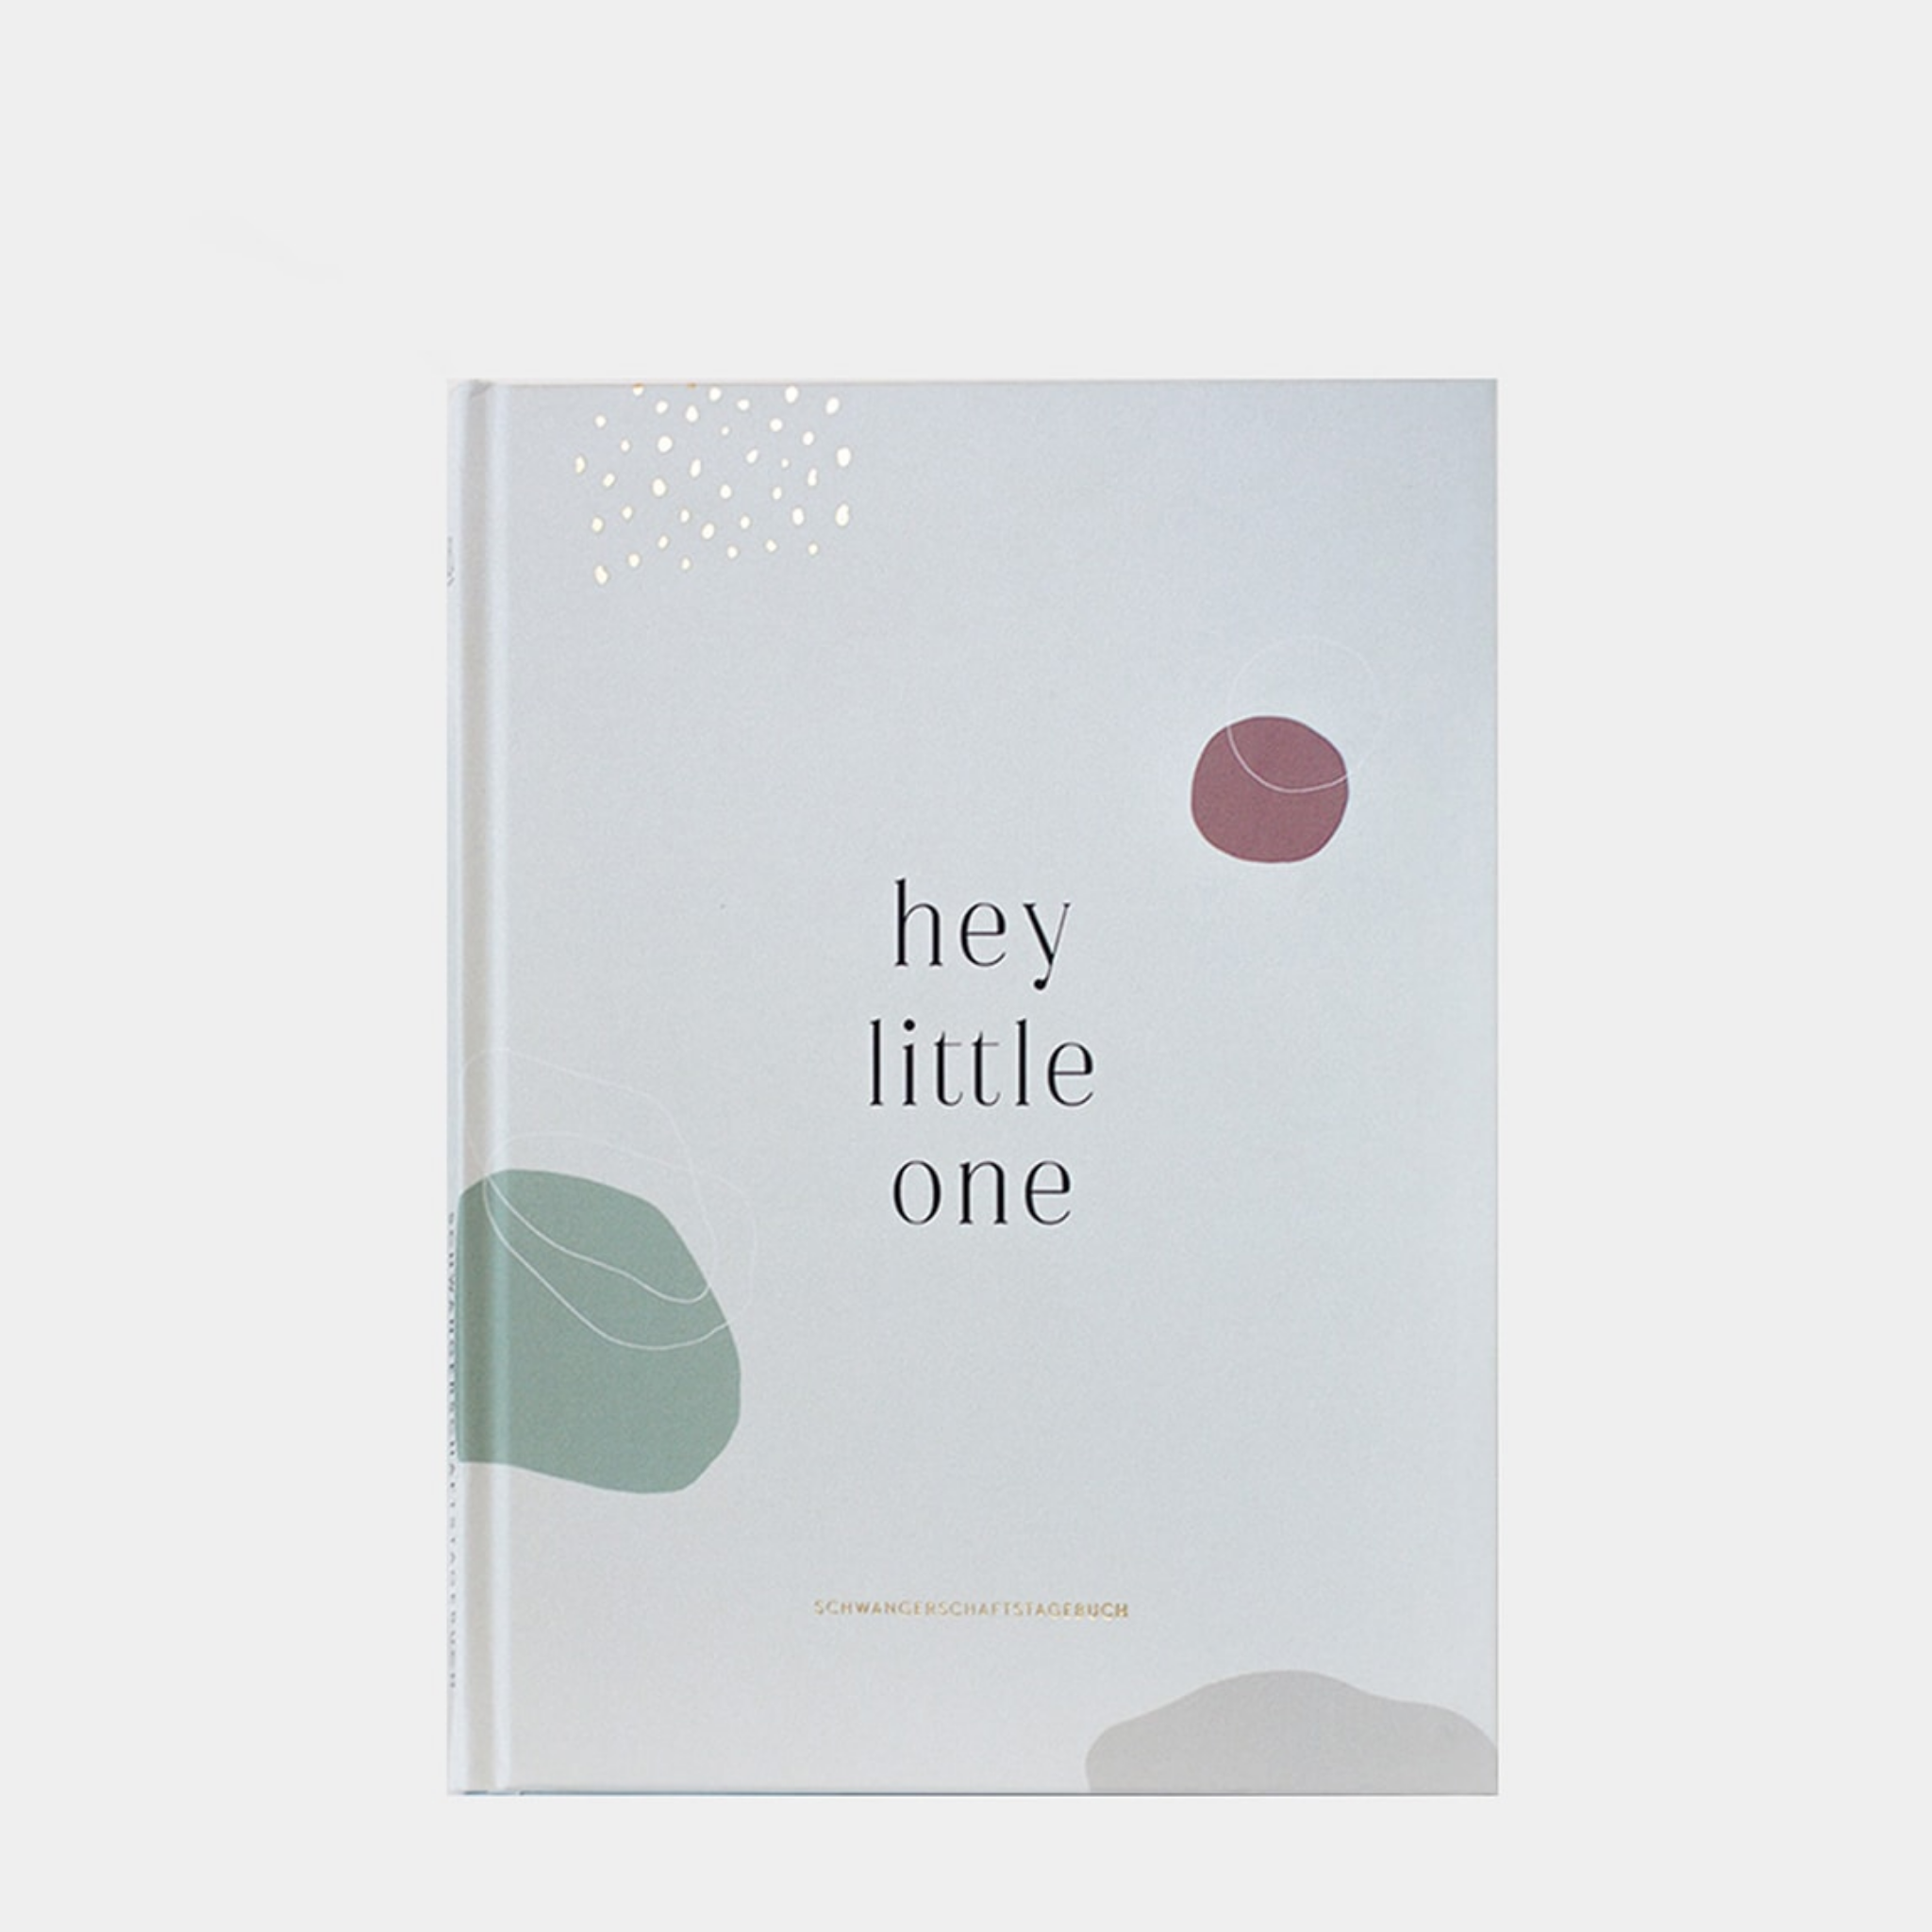 Schwangerschaftstagbuch "Hey Little One"